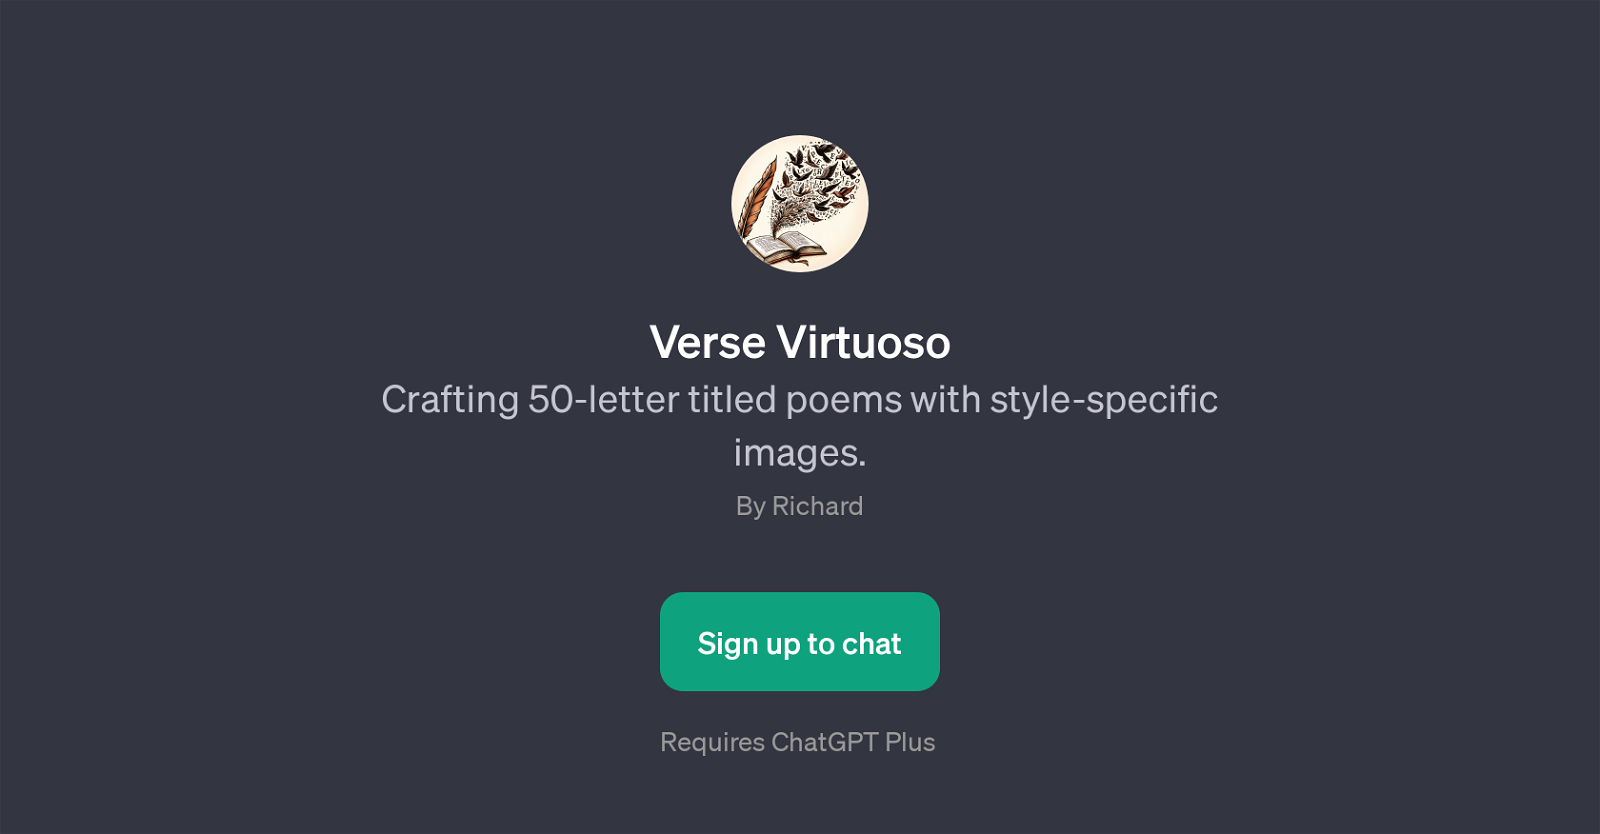 Verse Virtuoso website